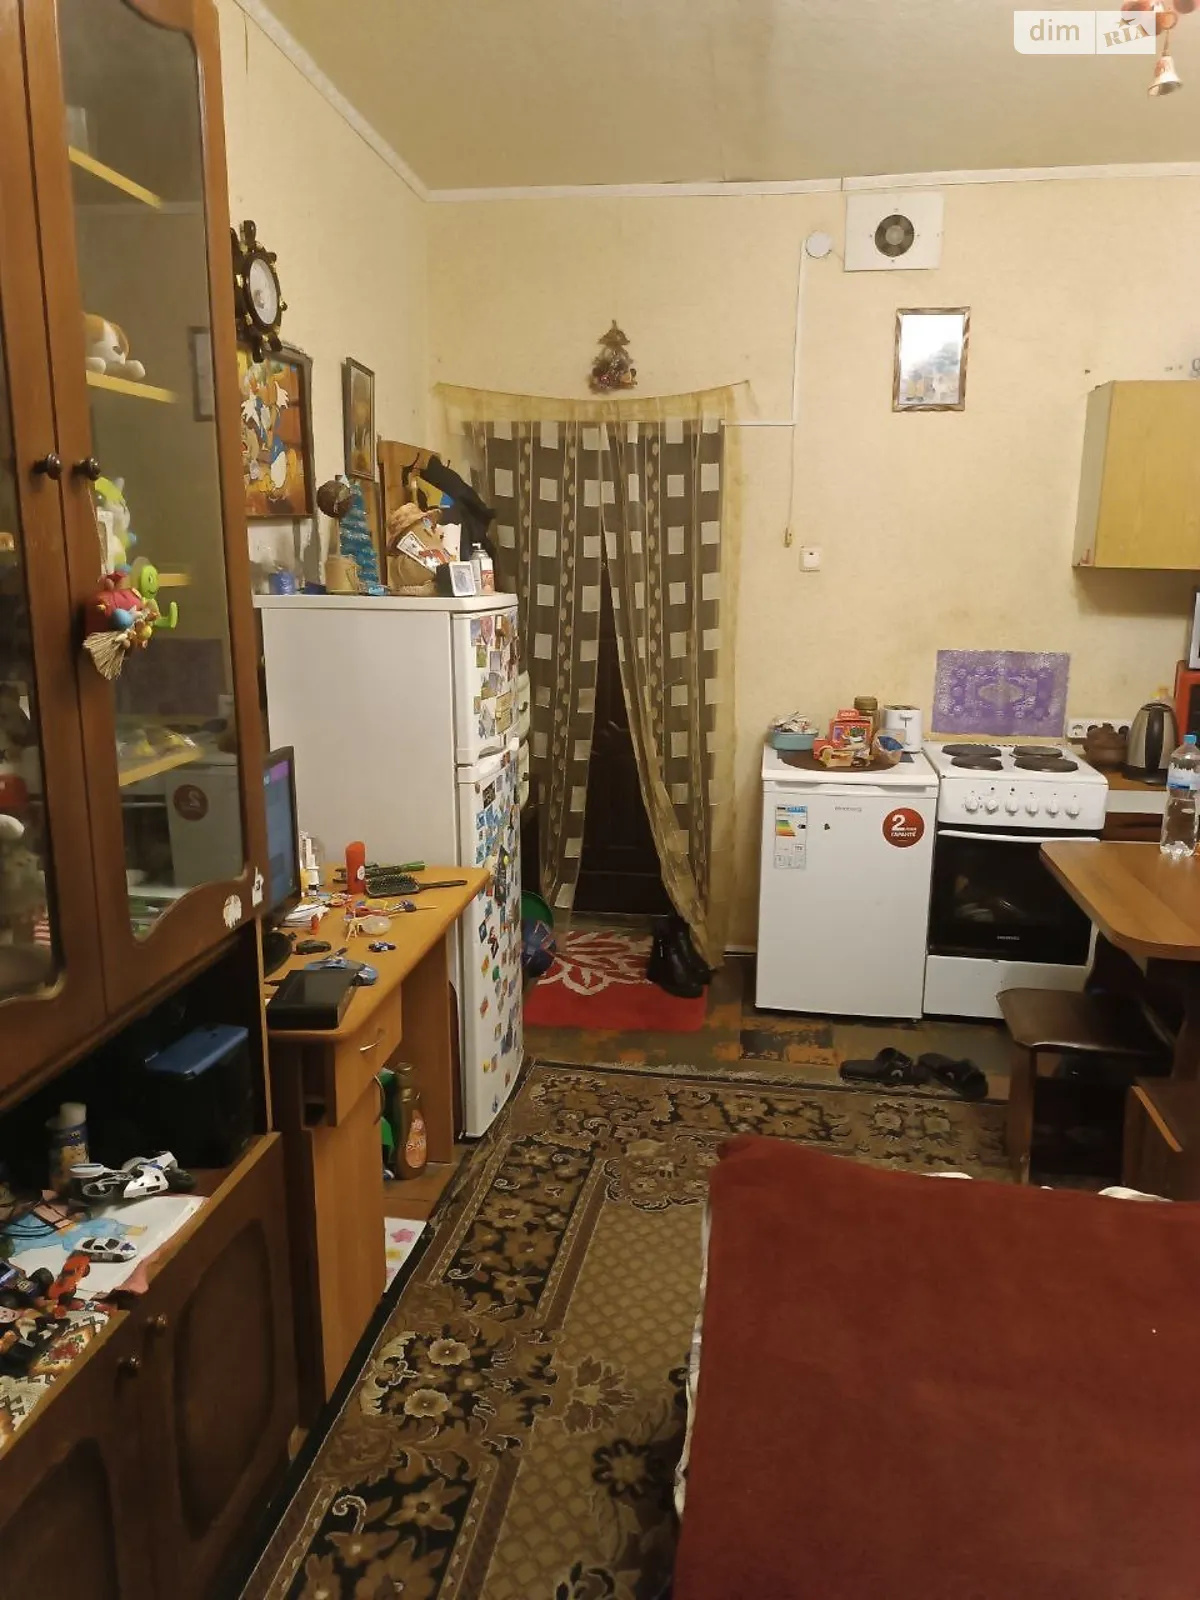 Продается комната 27 кв. м в Киеве, цена: 15500 $ - фото 1